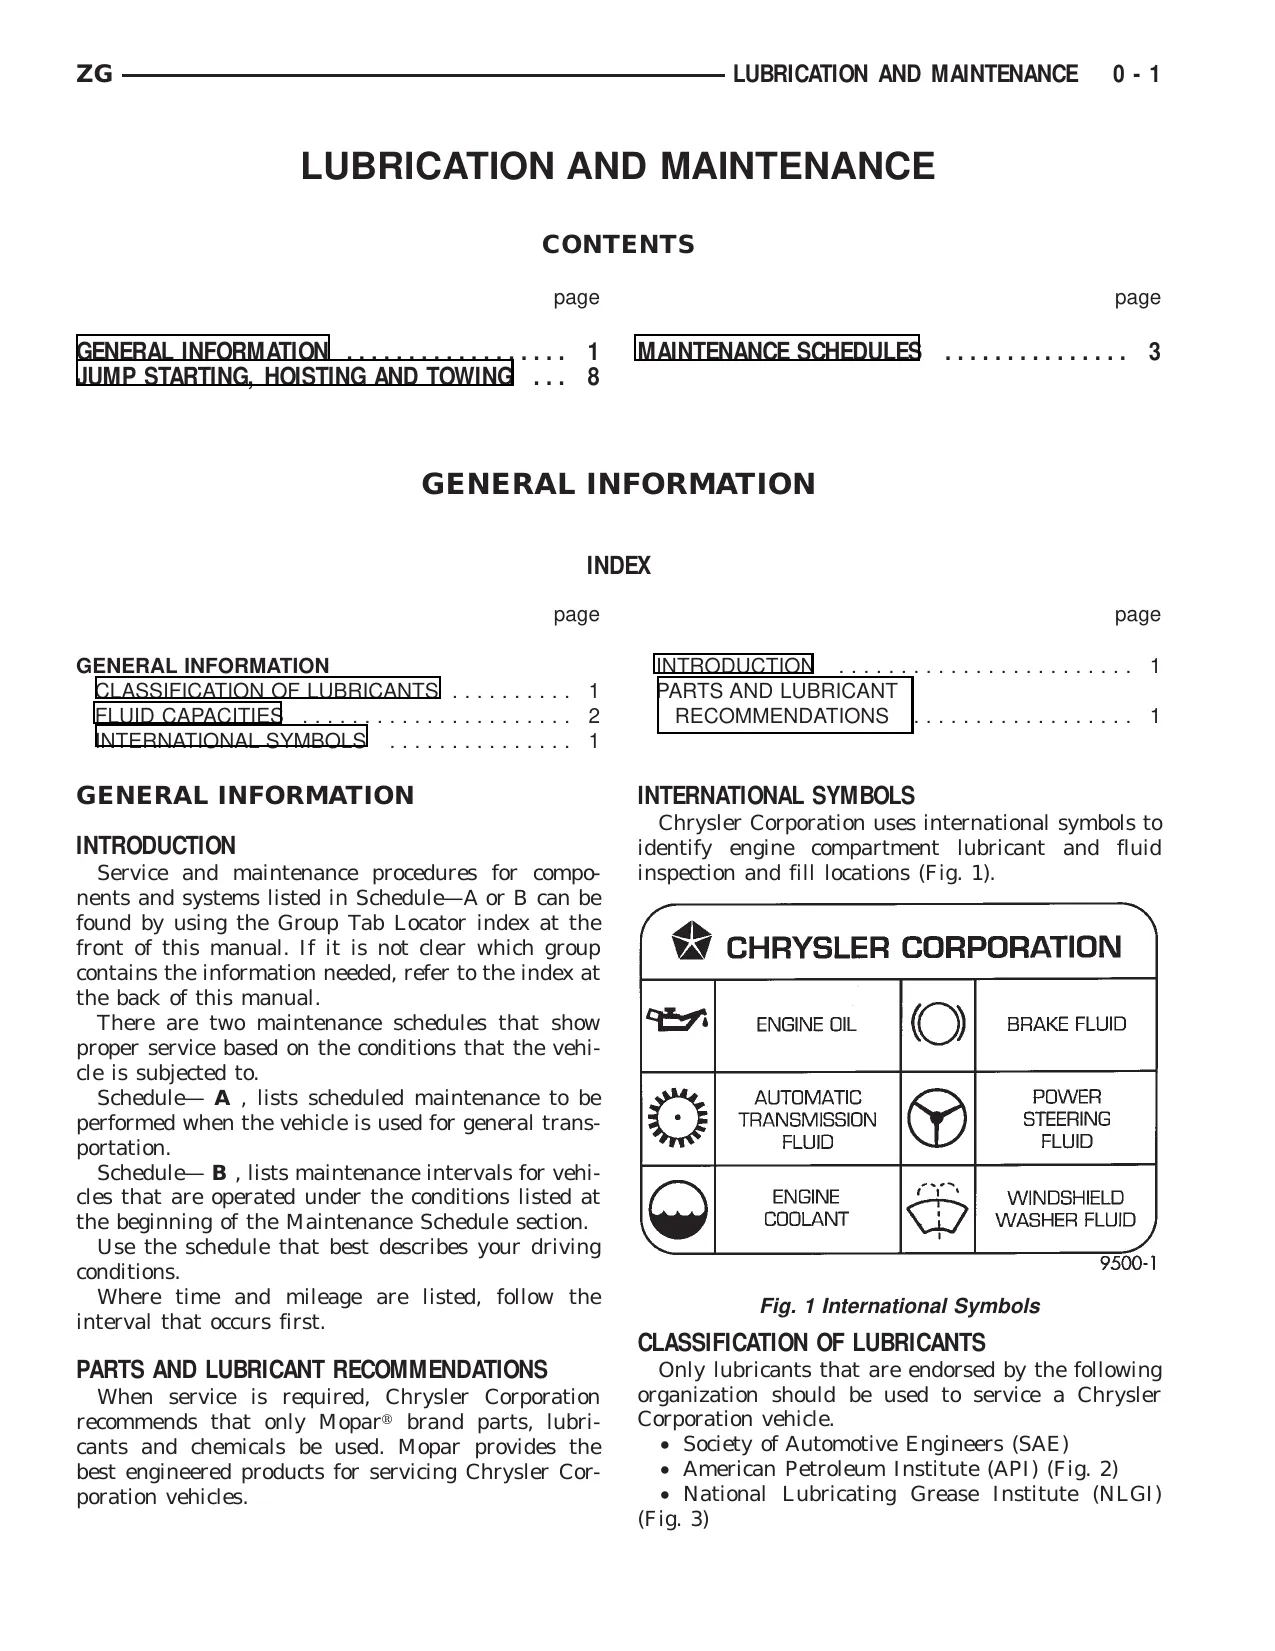 1997 Jeep Grand Cherokee service manual